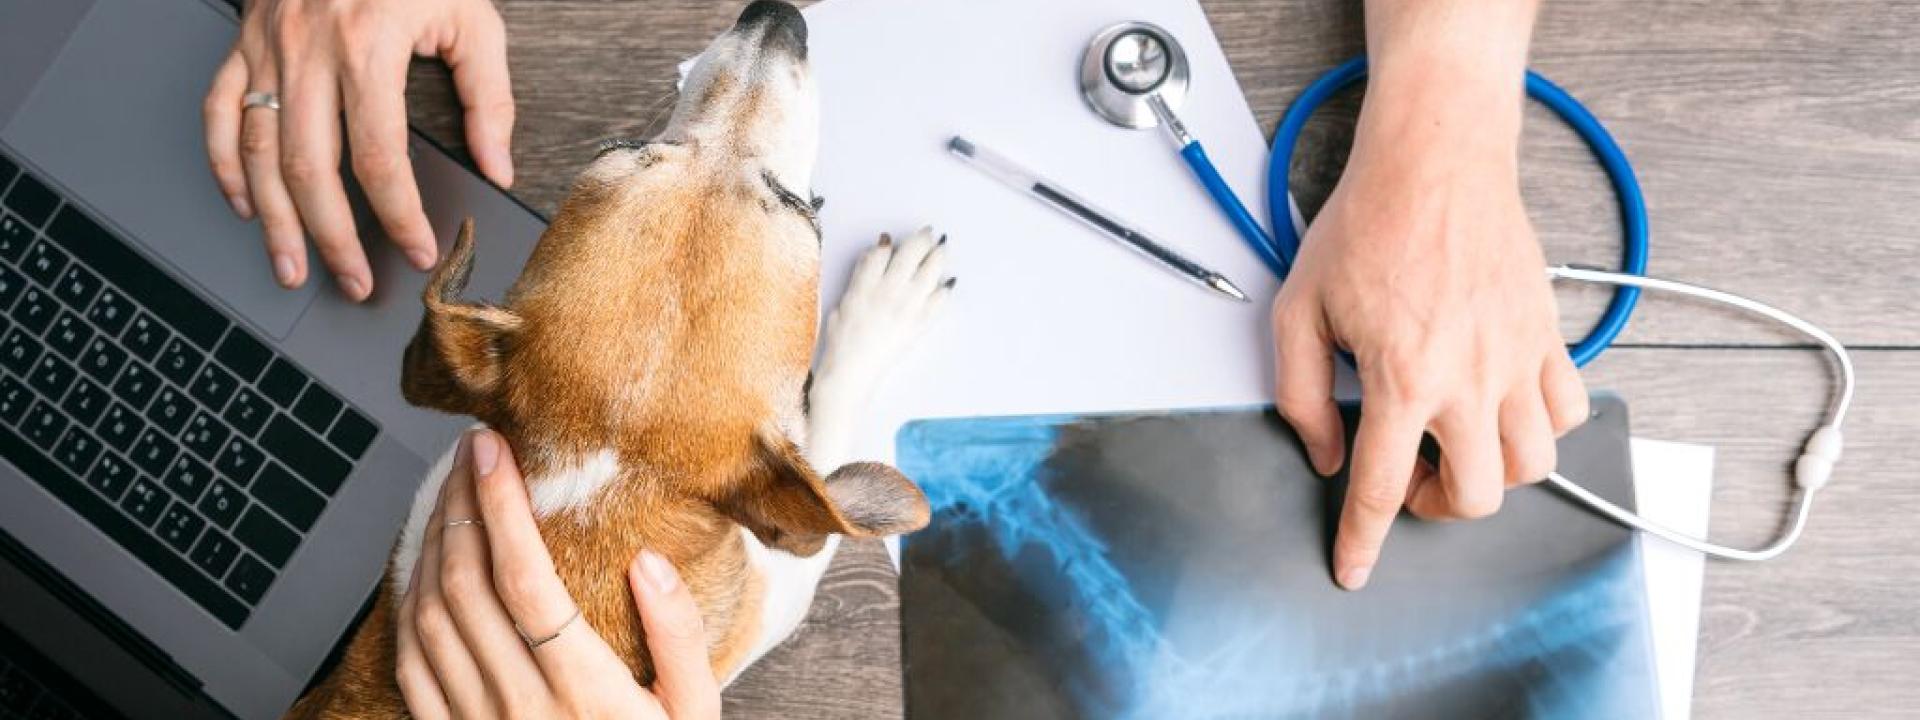 Veterinary examination consultation for dog with an X-ray